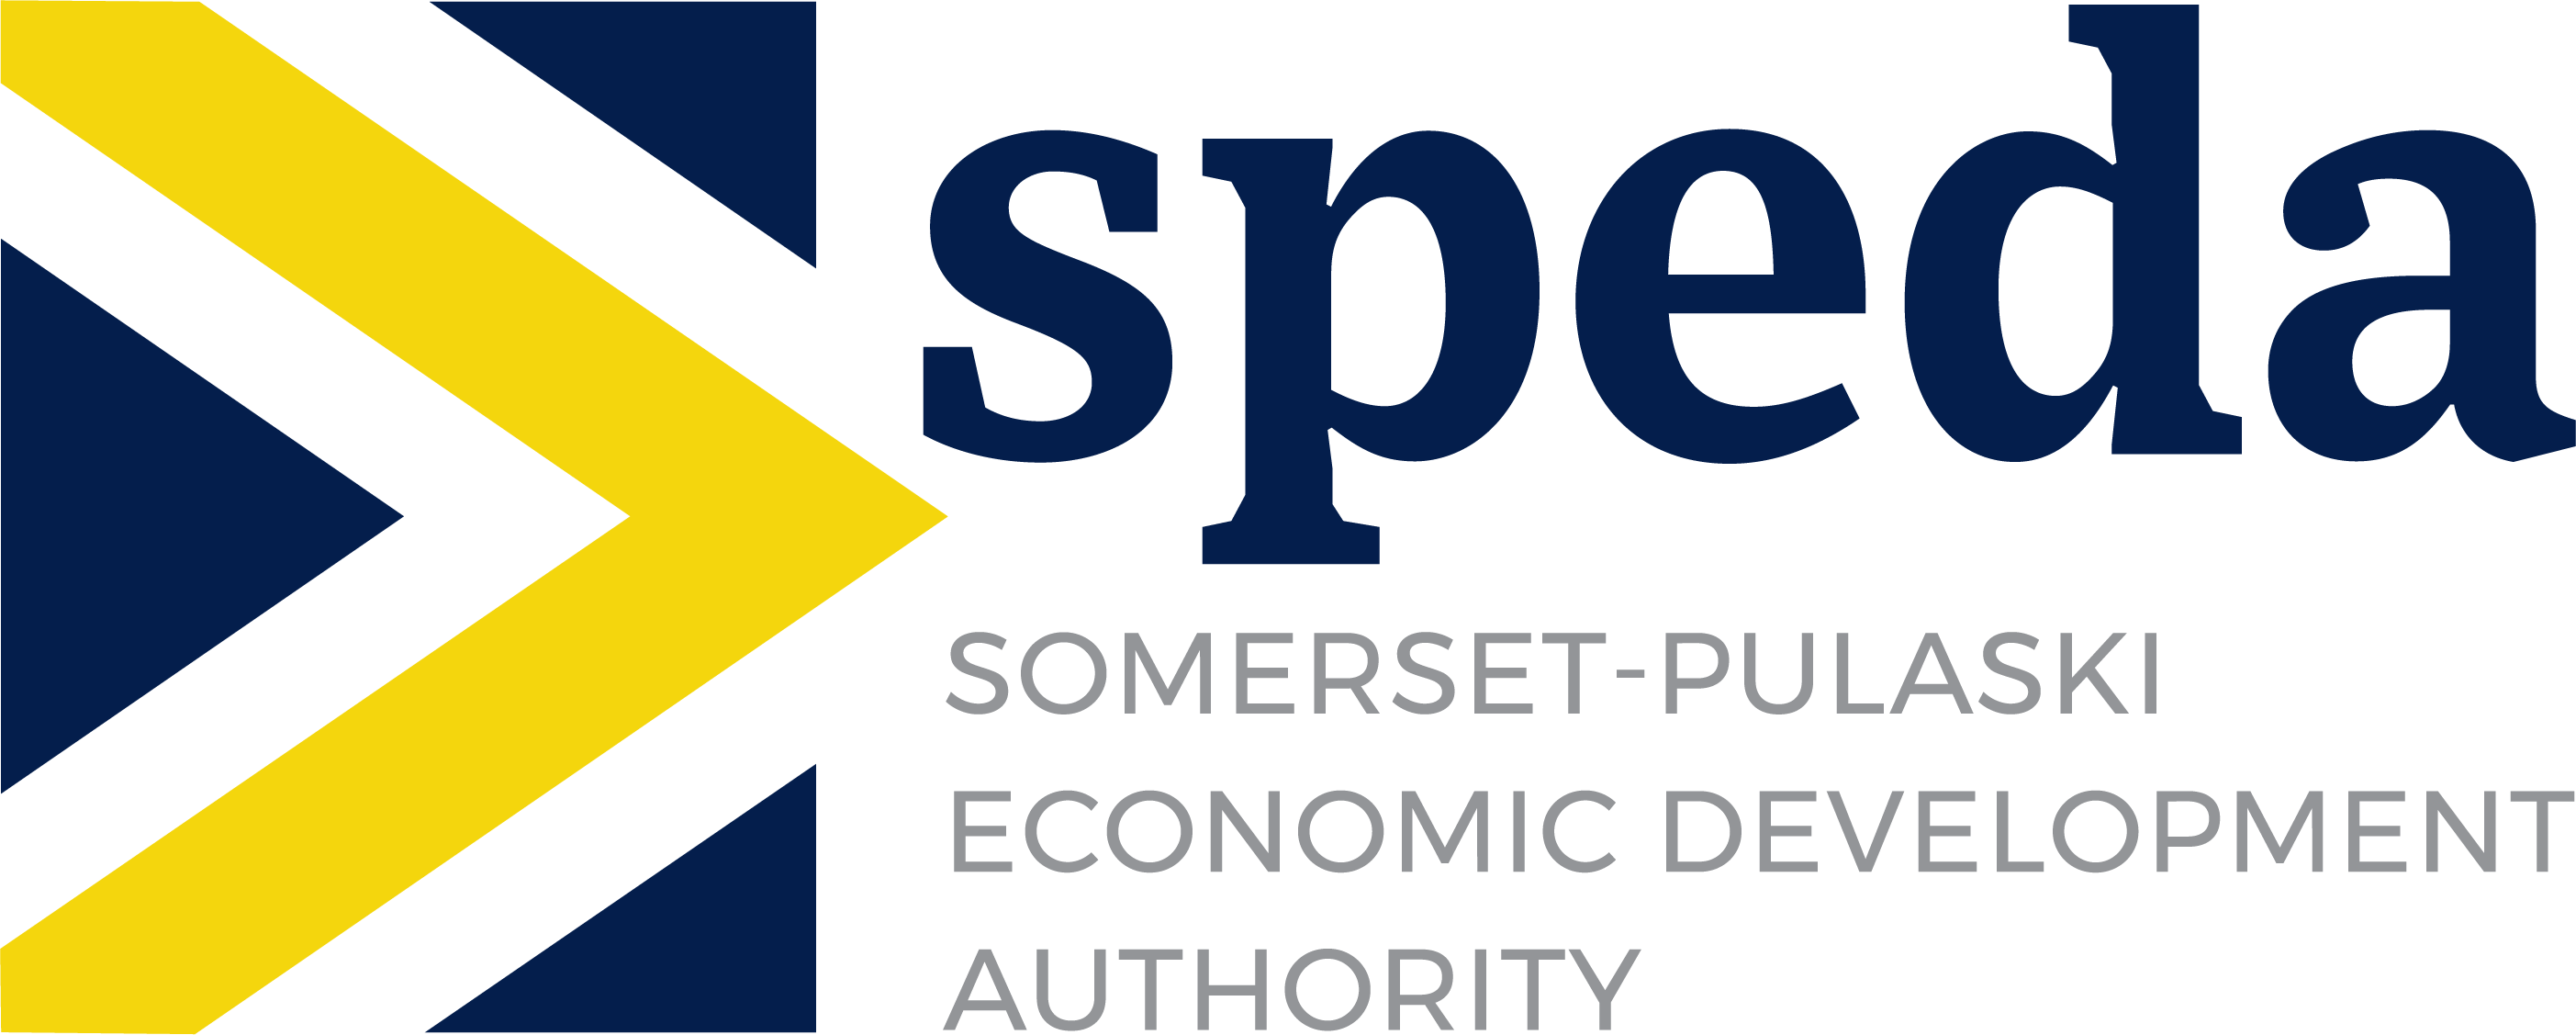 Somerset Pulaski Economic Development Authority